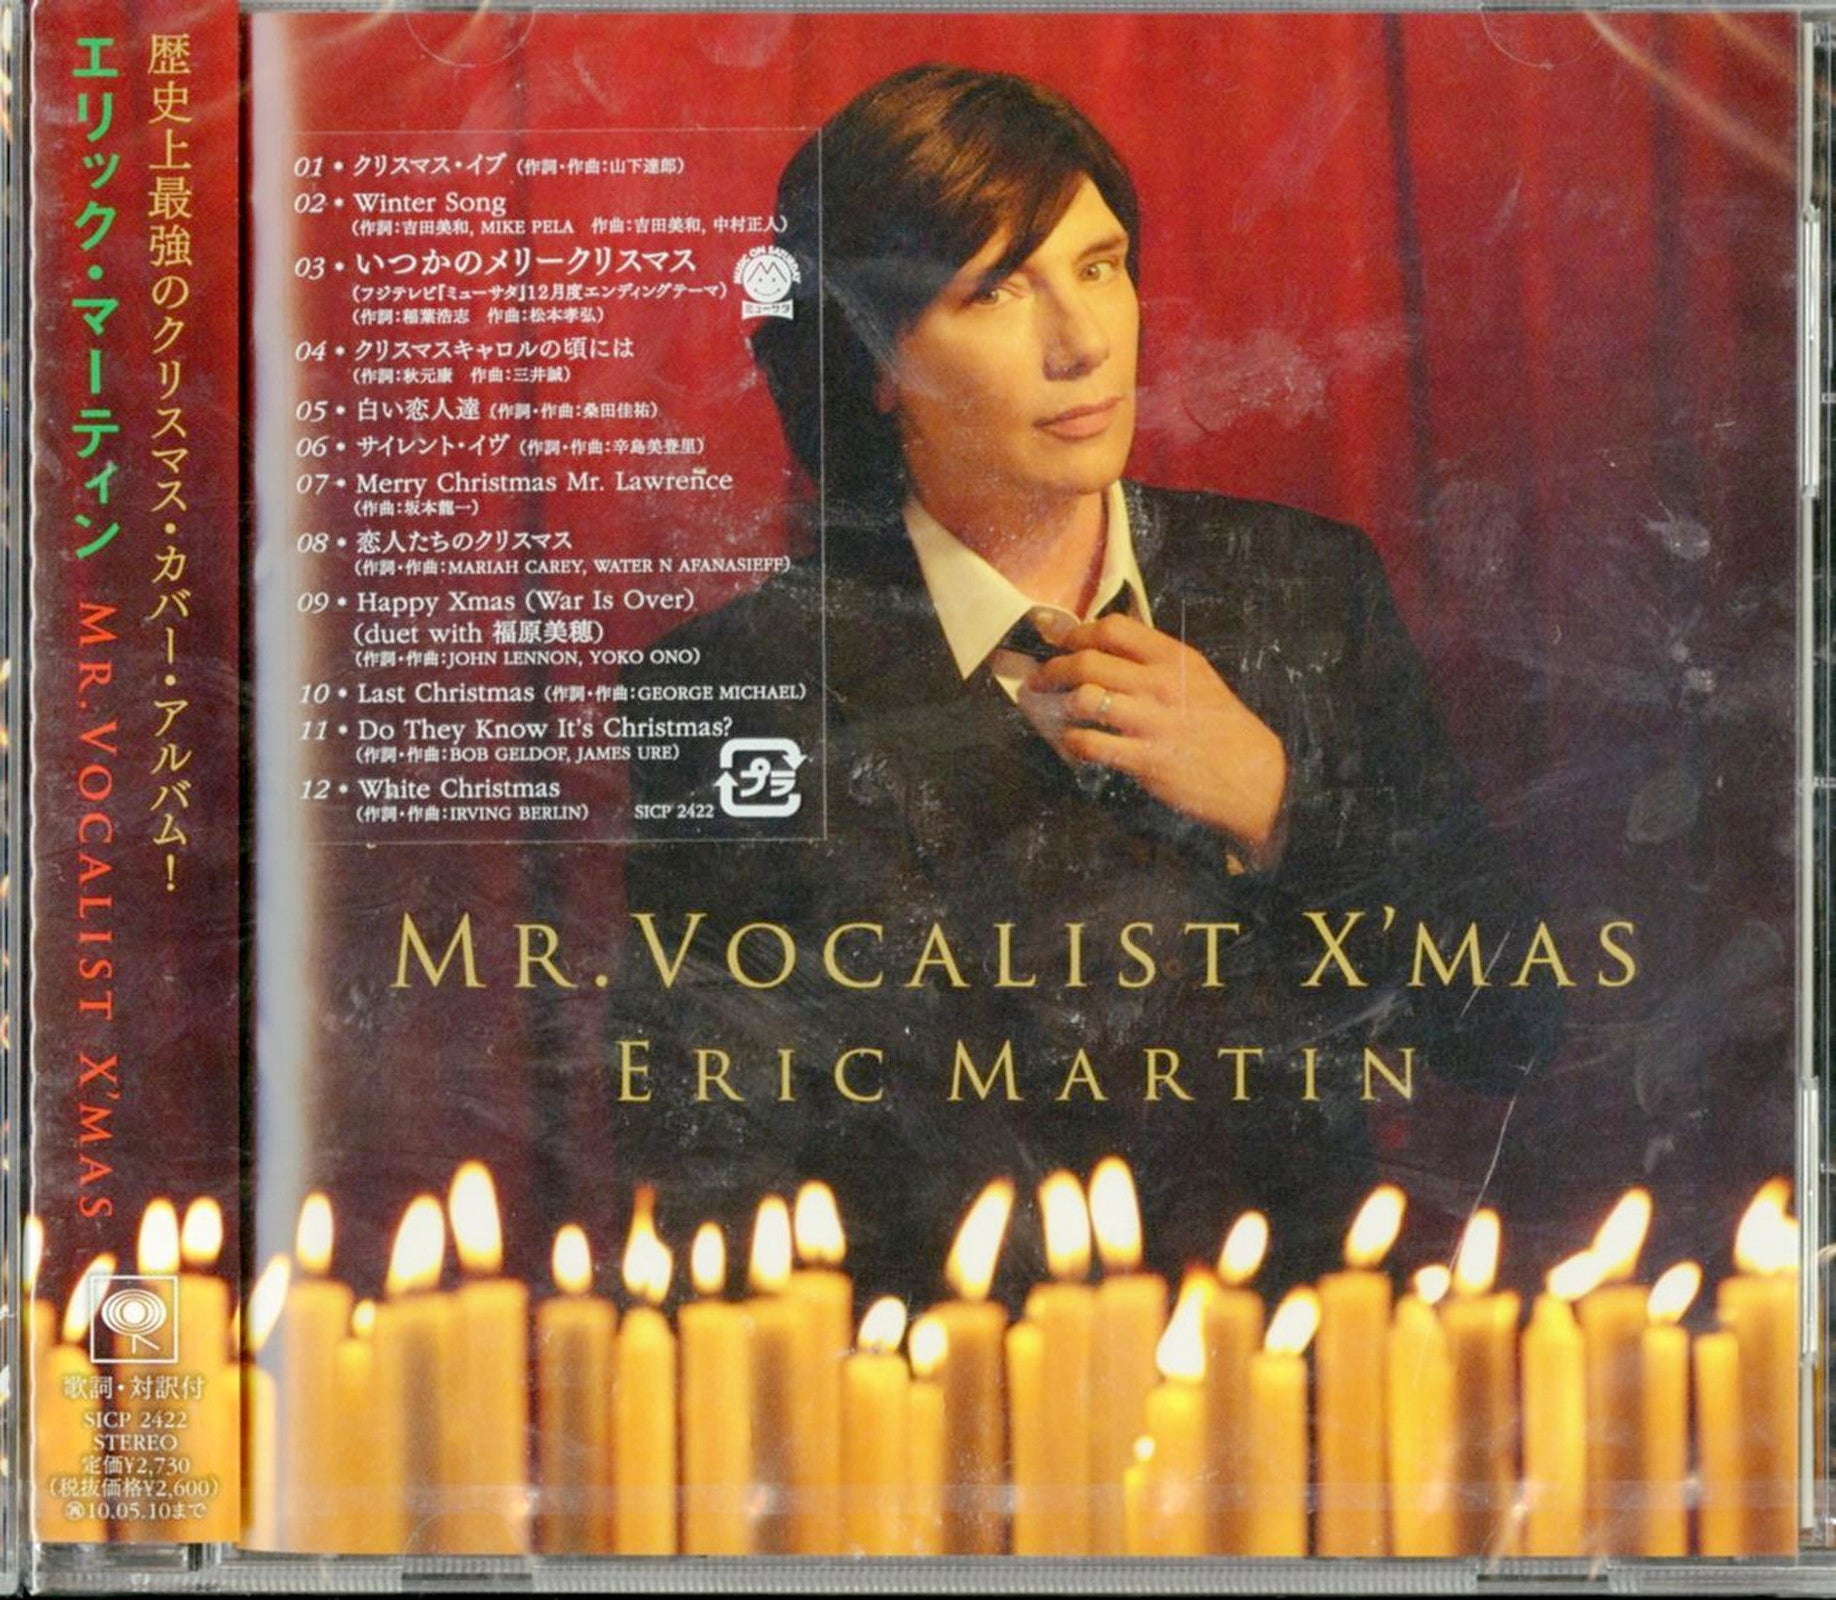 Eric Martin - Mr.Vocalist X'Mas - Japan CD – CDs Vinyl Japan Store 